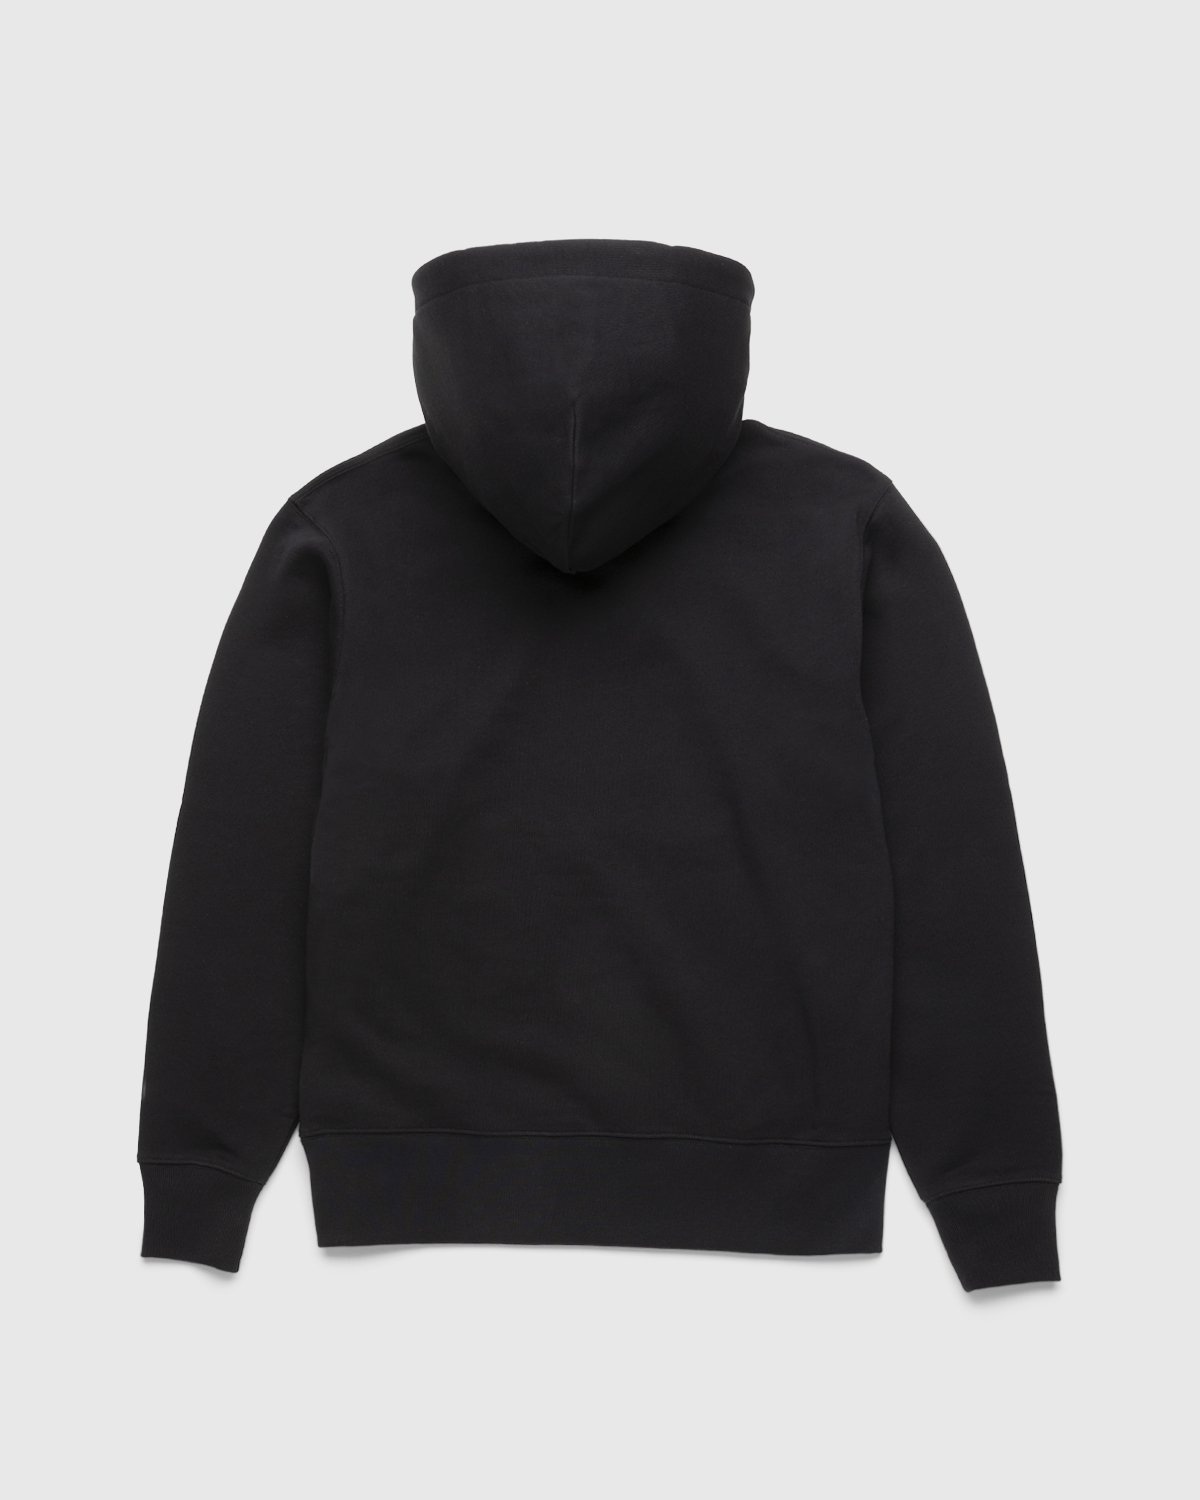 Acne Studios - Organic Cotton Hooded Sweatshirt Black - Clothing - Black - Image 2